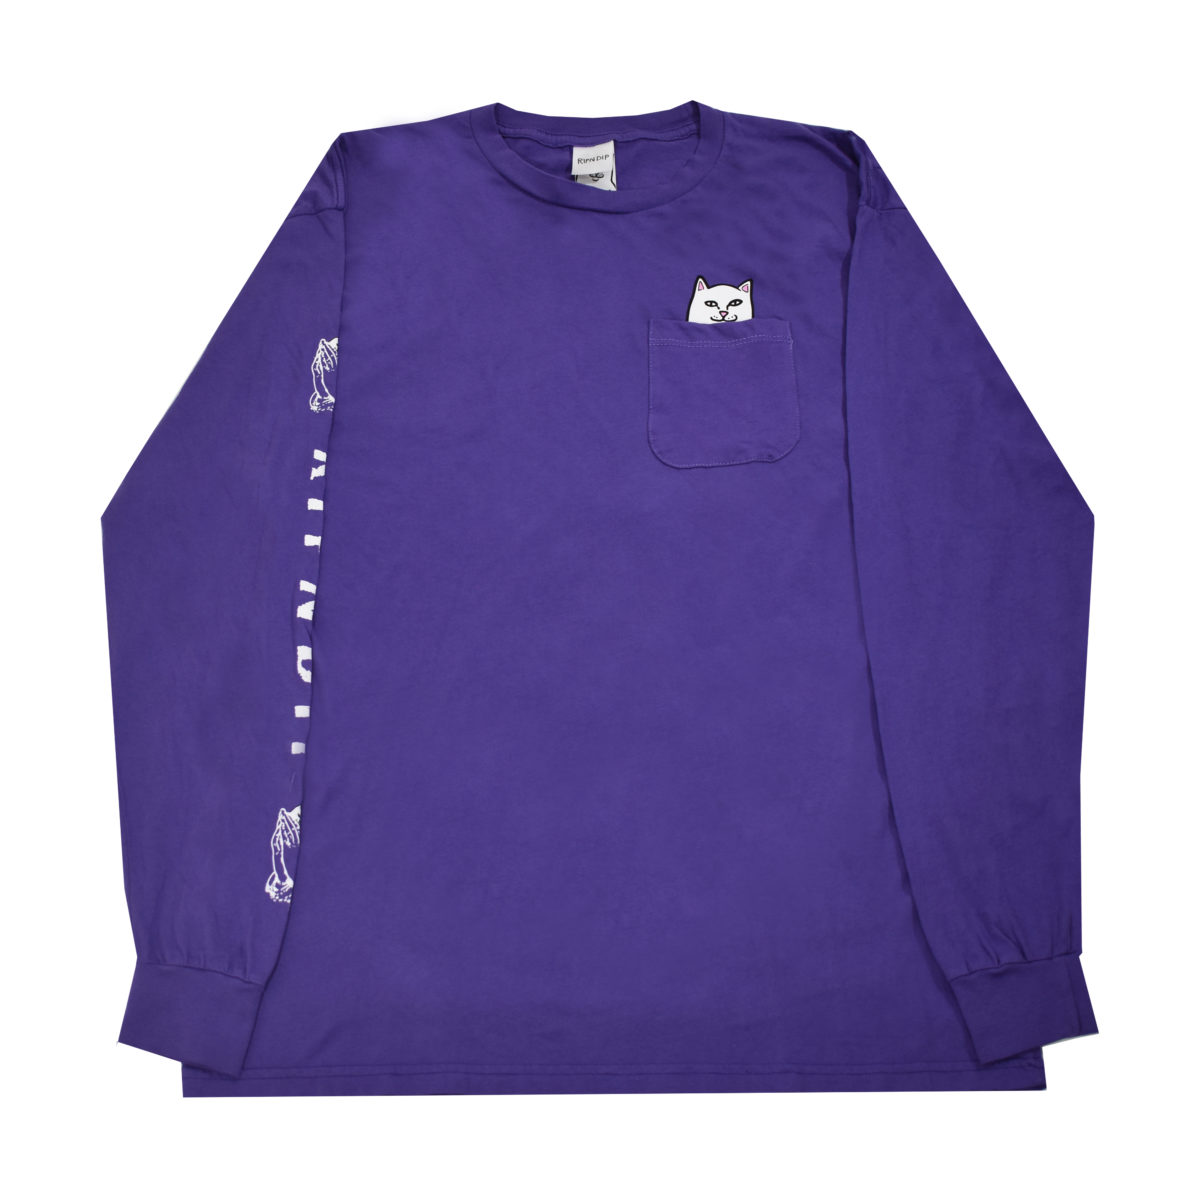 Camiseta RipnDip Lord Nermal Pocket Long Sleeve purple